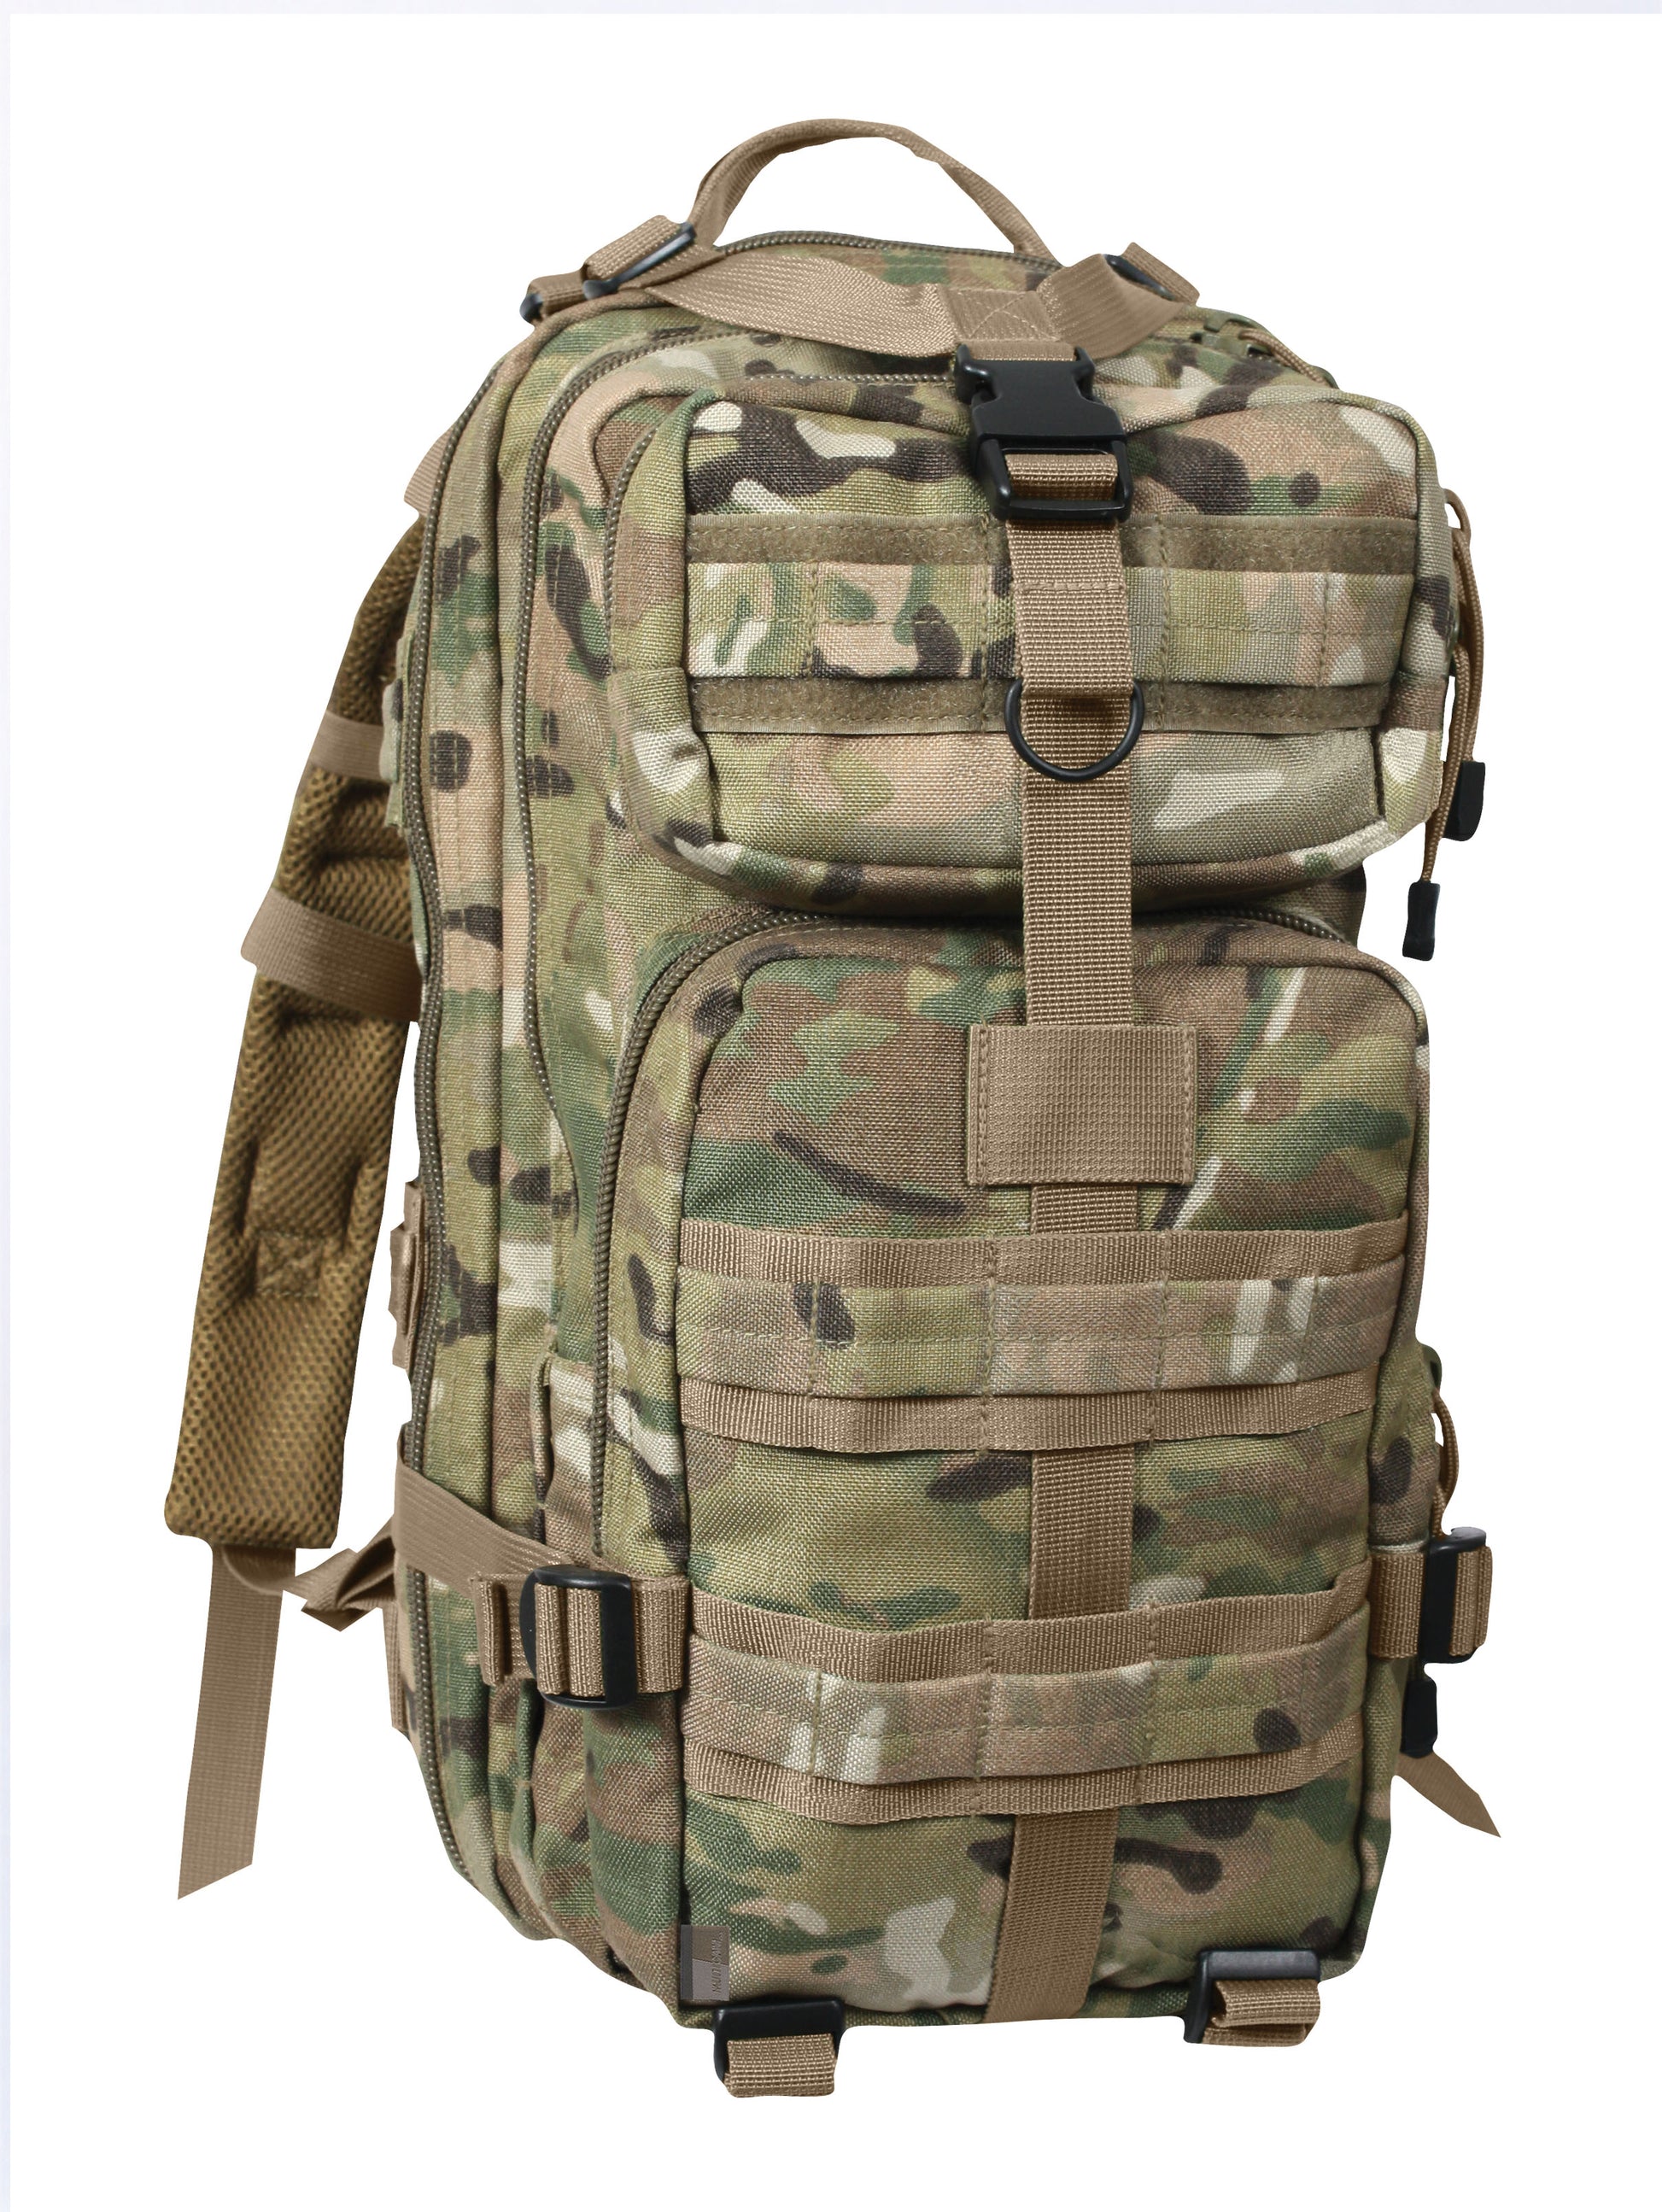 Milspec Camo Medium Transport Pack Gifts For Him MilTac Tactical Military Outdoor Gear Australia